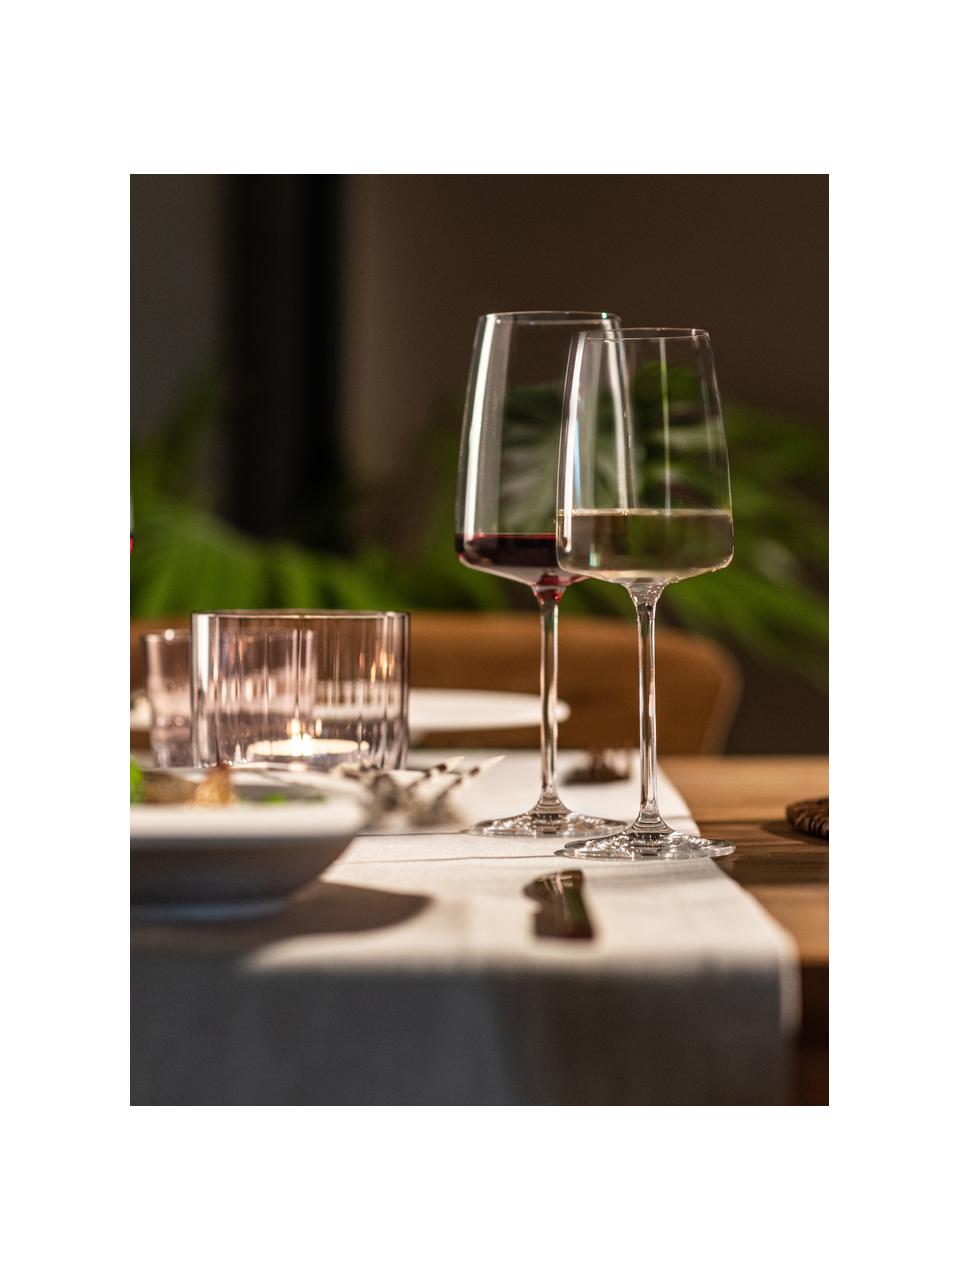 Kristall-Weingläser fruchtig & fein Vivid Senses, 2 Stück, Tritan-Kristallglas, Transparent, Ø 9 x H 24 cm, 530 ml